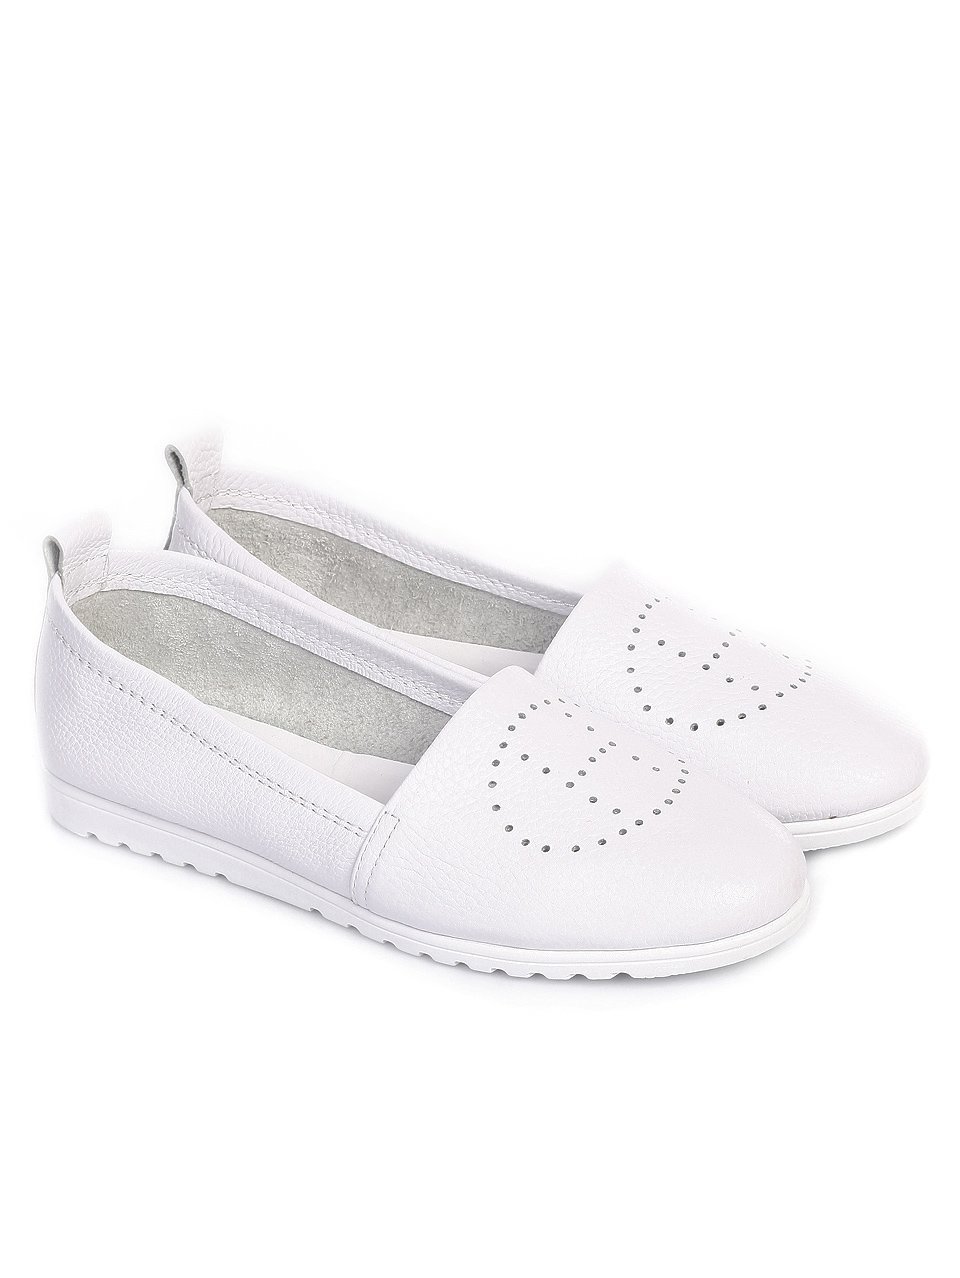 Ежедневни дамски обувки от естествена кожа 3AT-17573 white